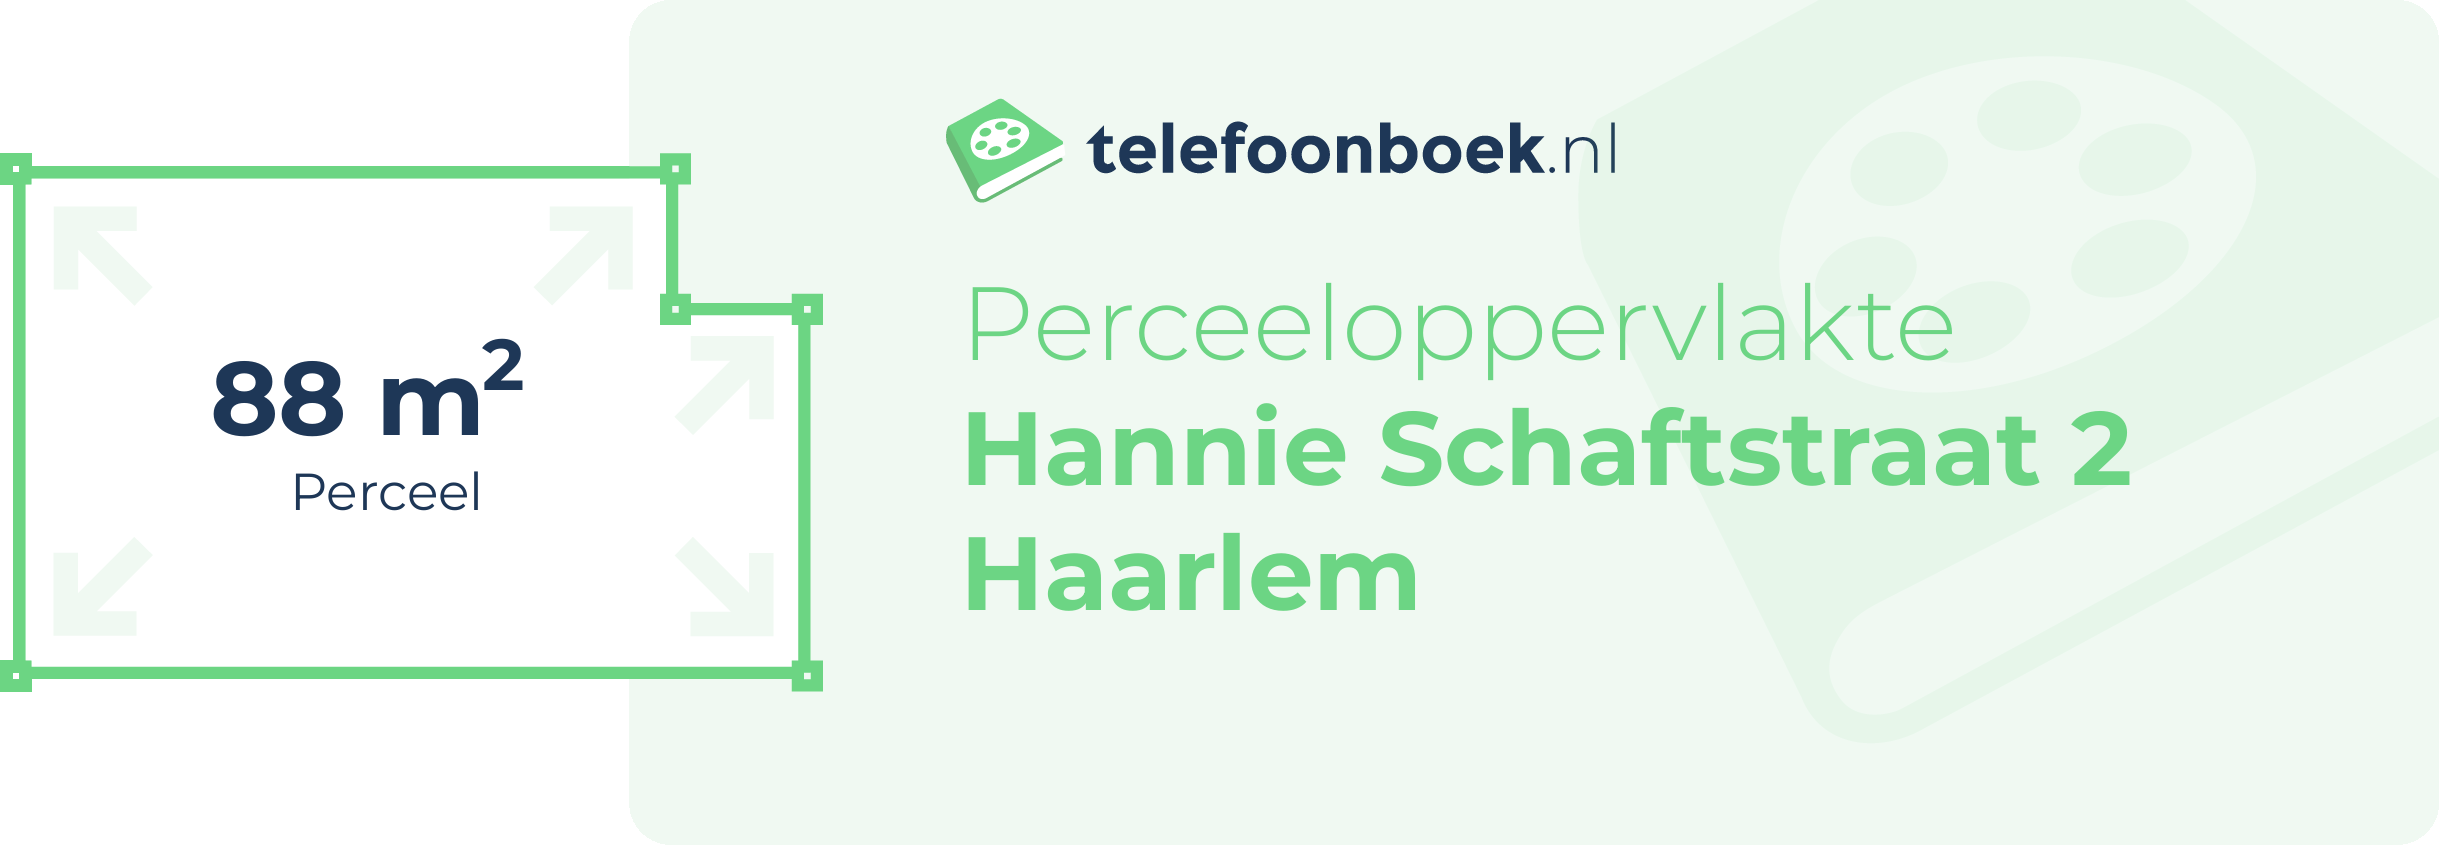 Perceeloppervlakte Hannie Schaftstraat 2 Haarlem